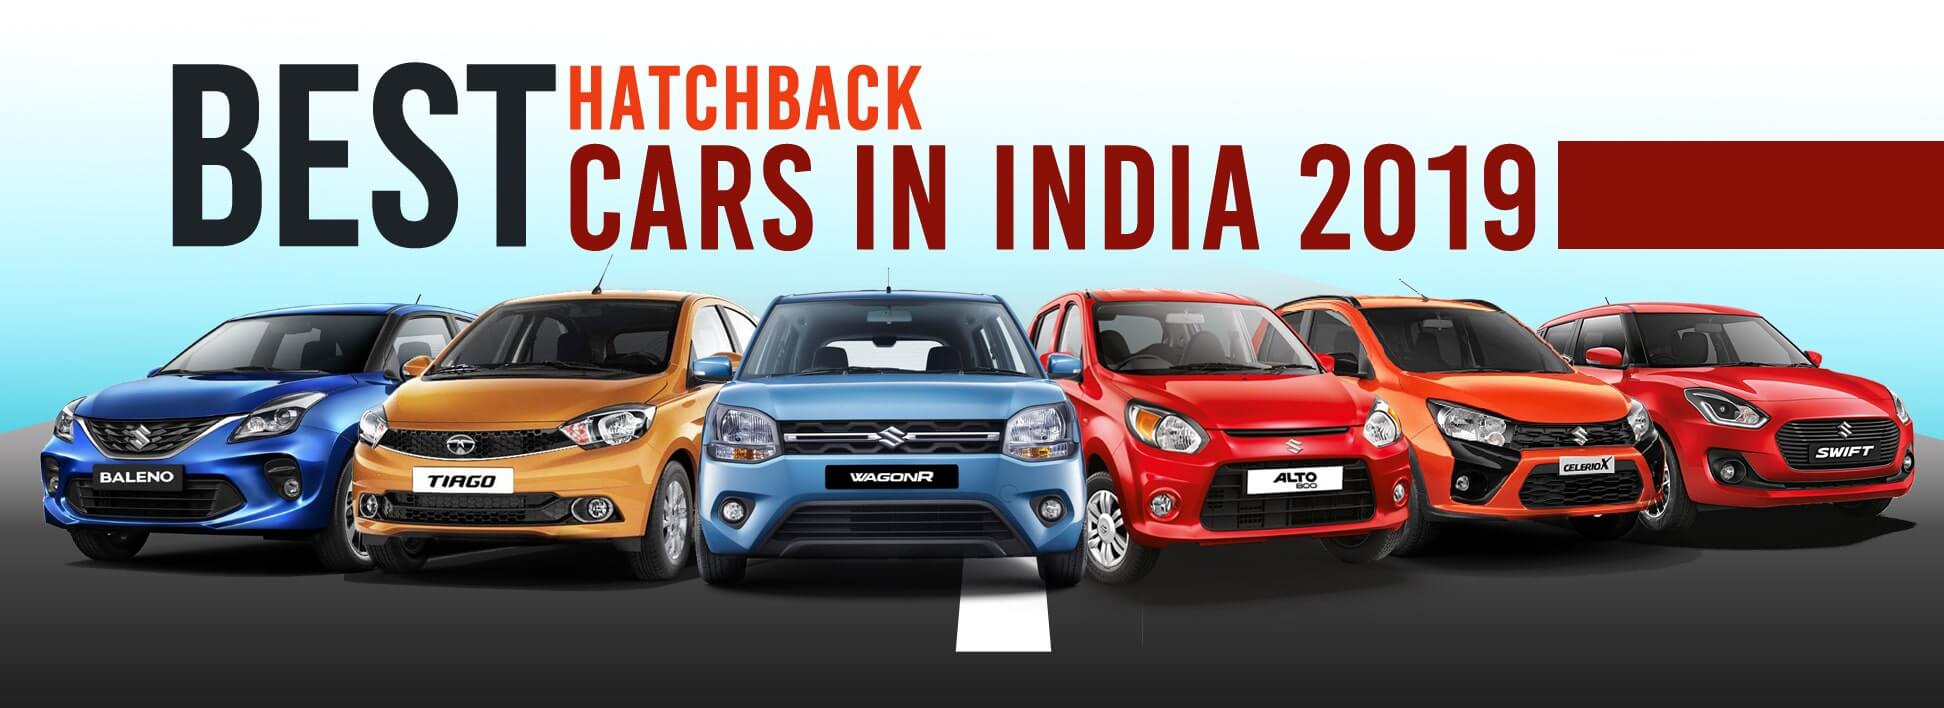 2019 Best Hatchbacks Cars in India